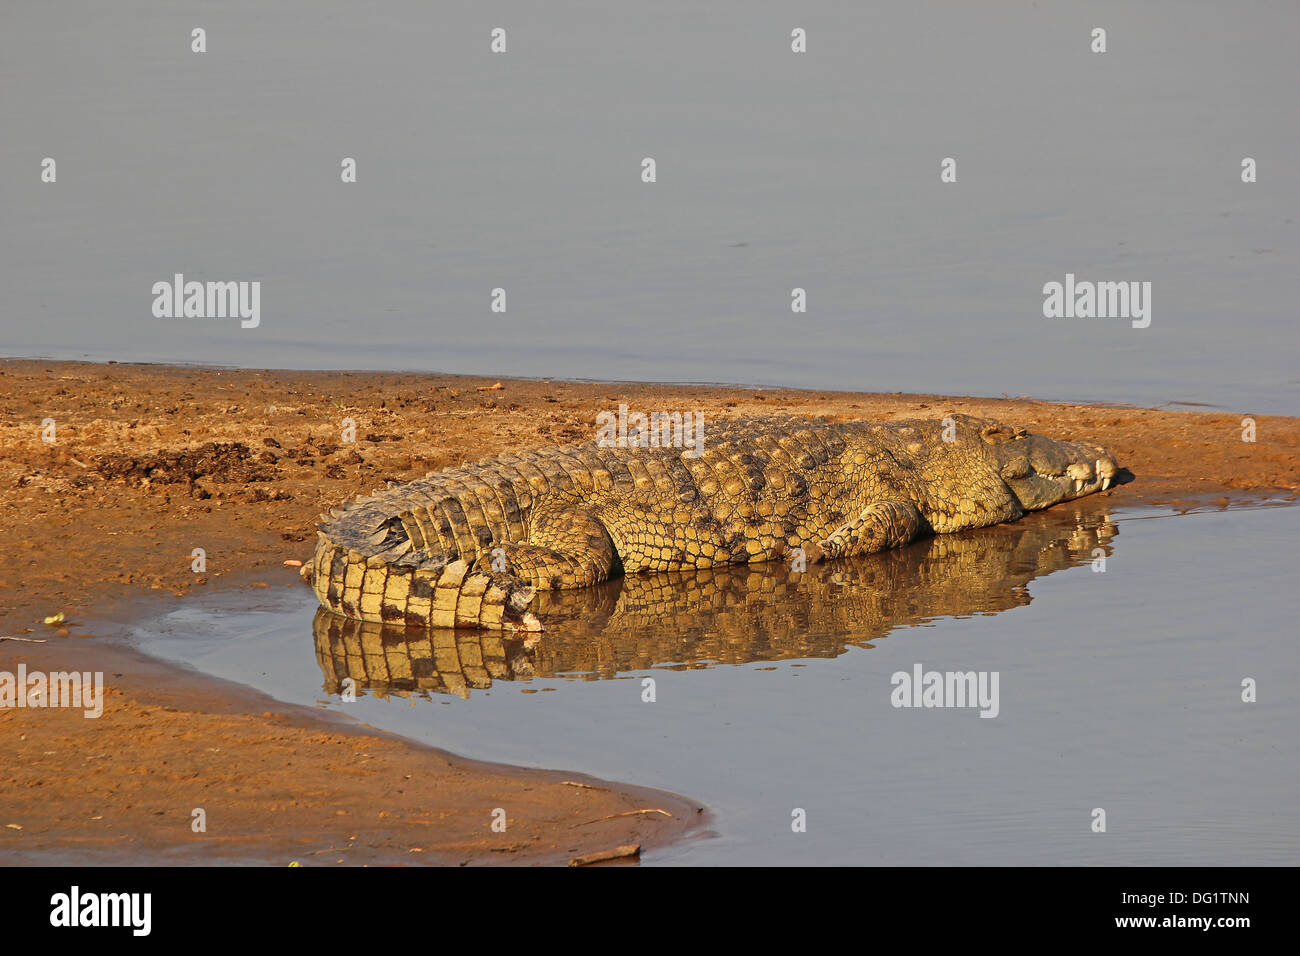 Crocodile in Zambia in Luangwa River Stock Photo